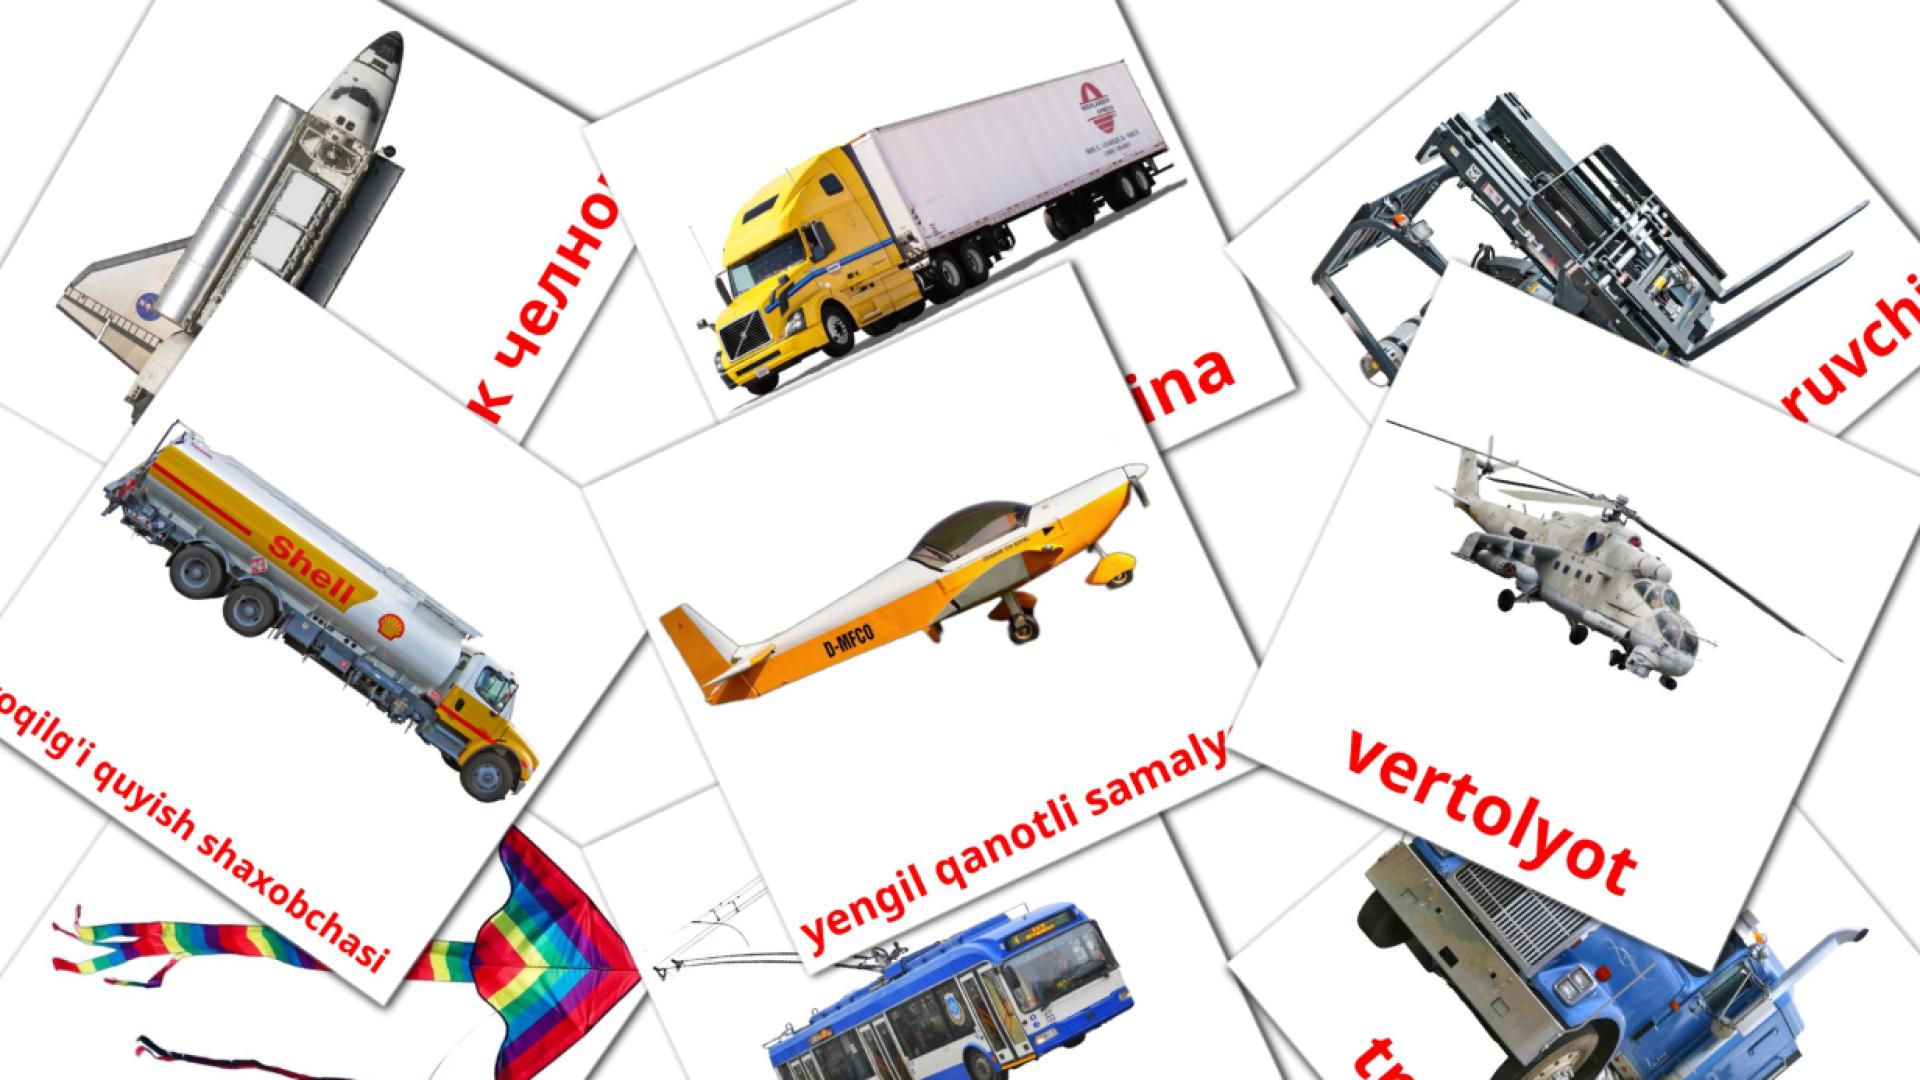 Transport uzbek vocabulary flashcards